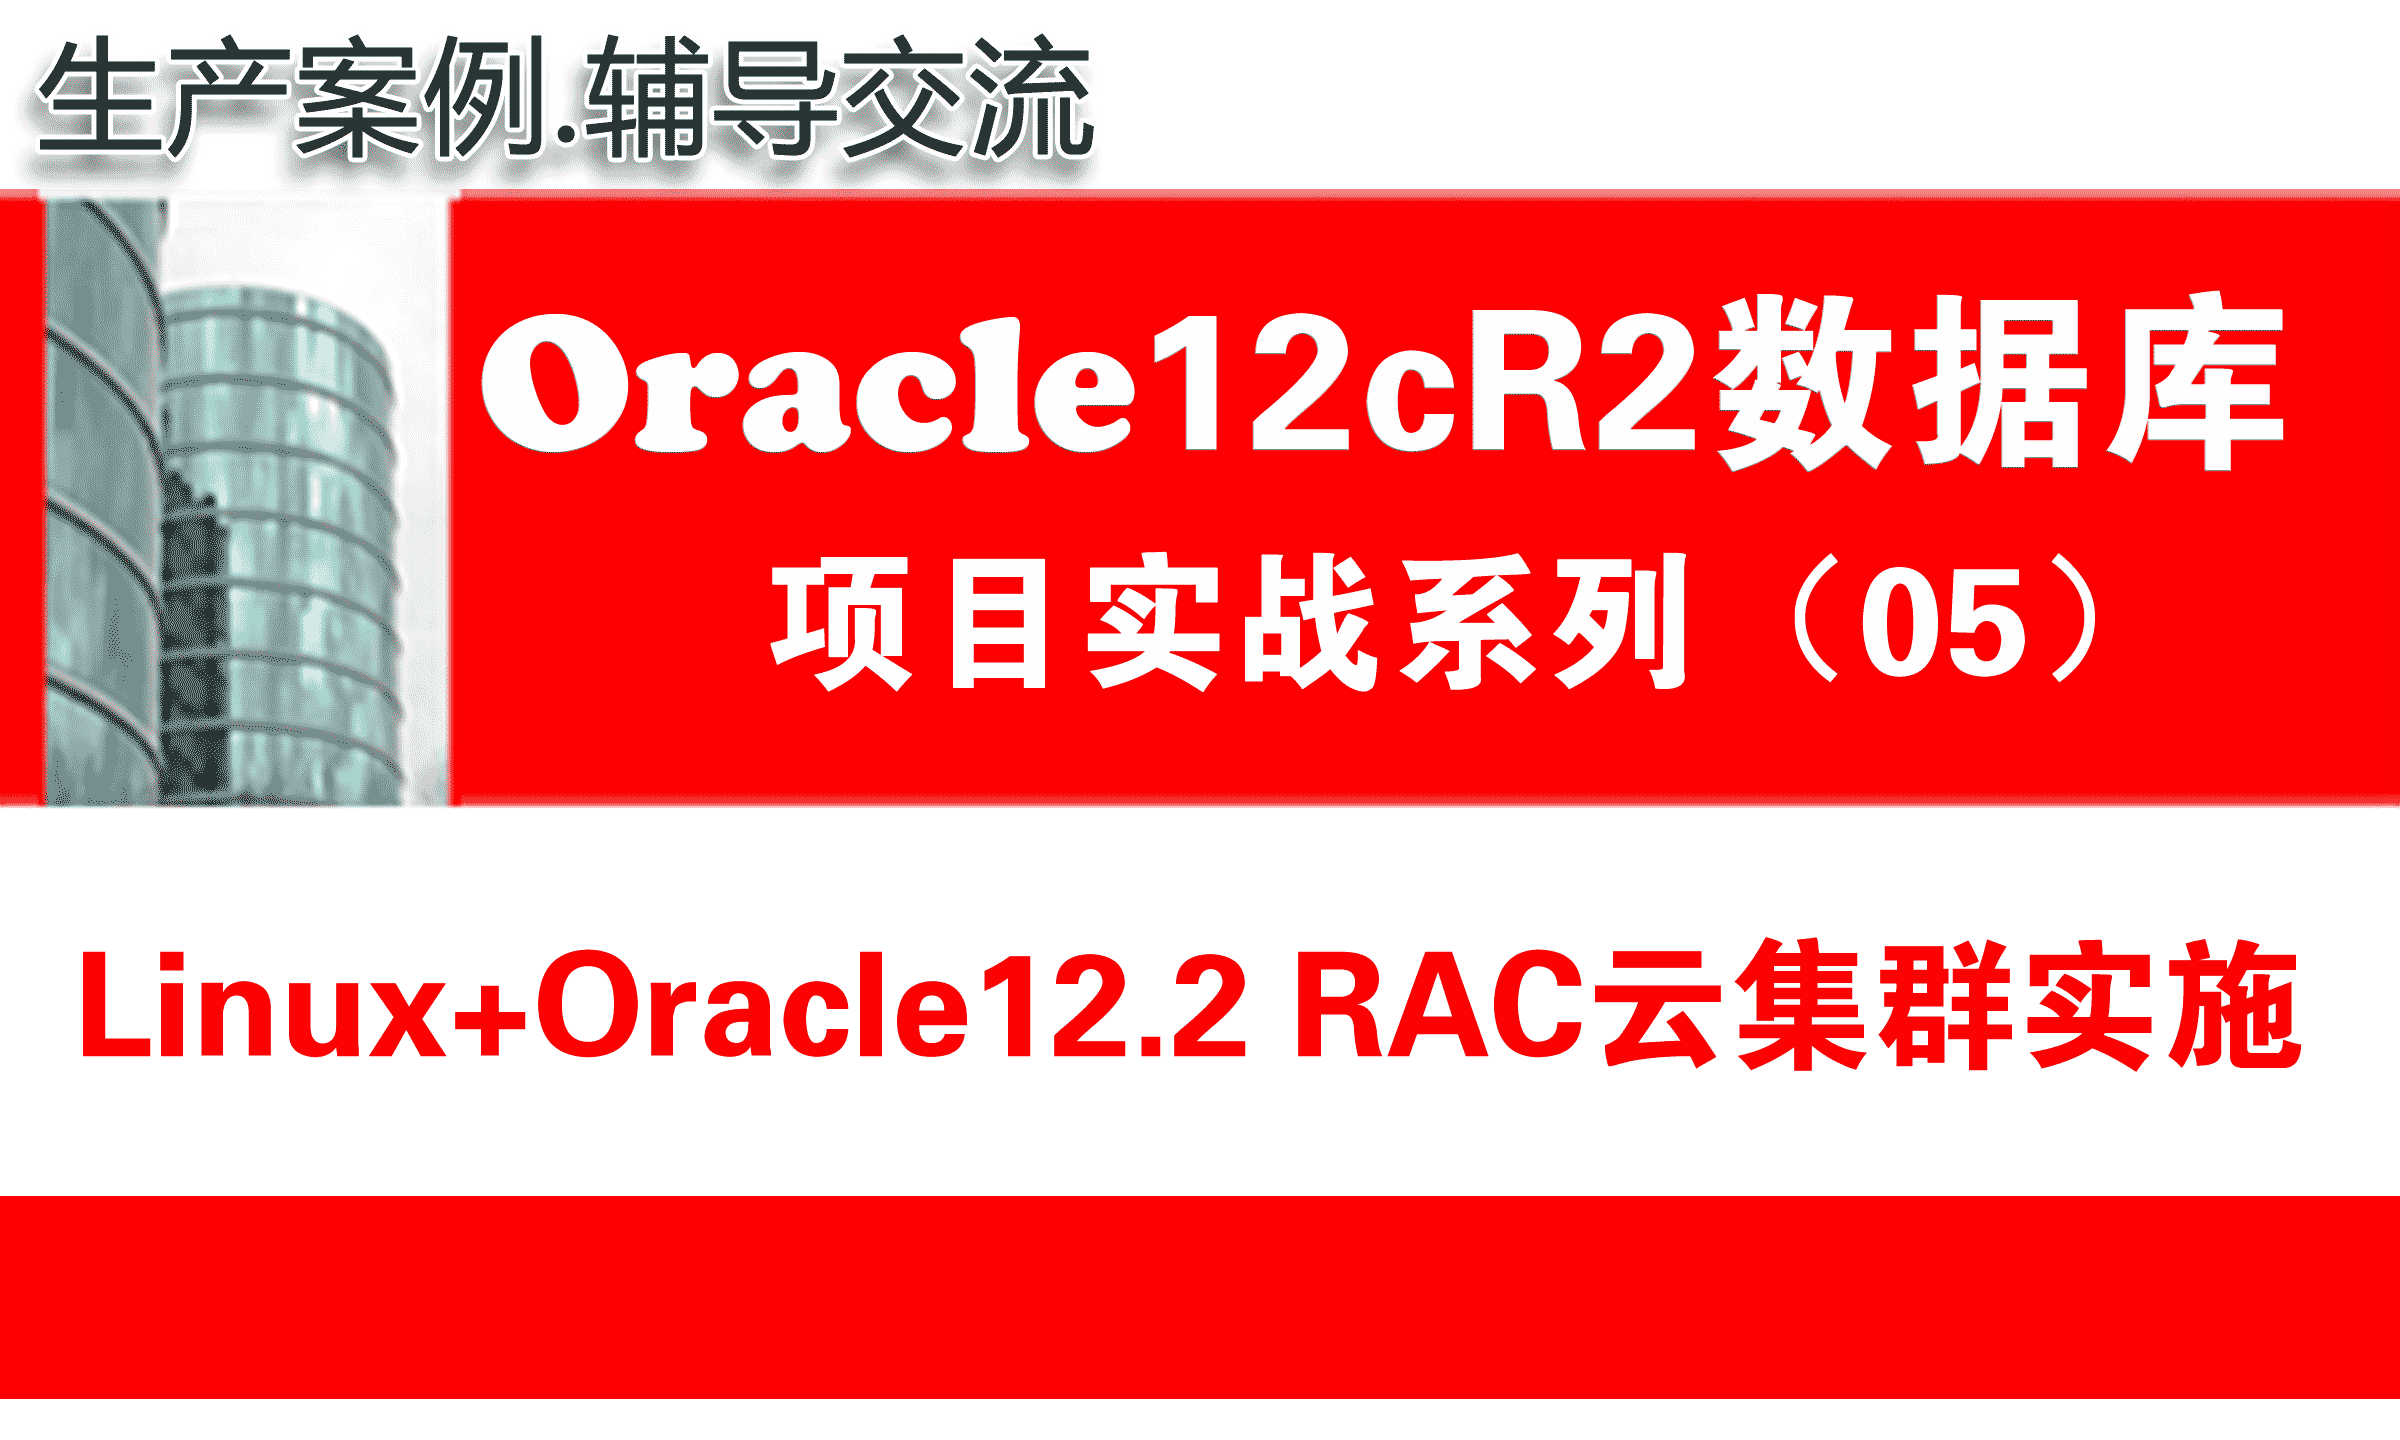 Oracle12c RAC培训教程5：生产环境Linux系统Oracle12cR2 RAC集群配置